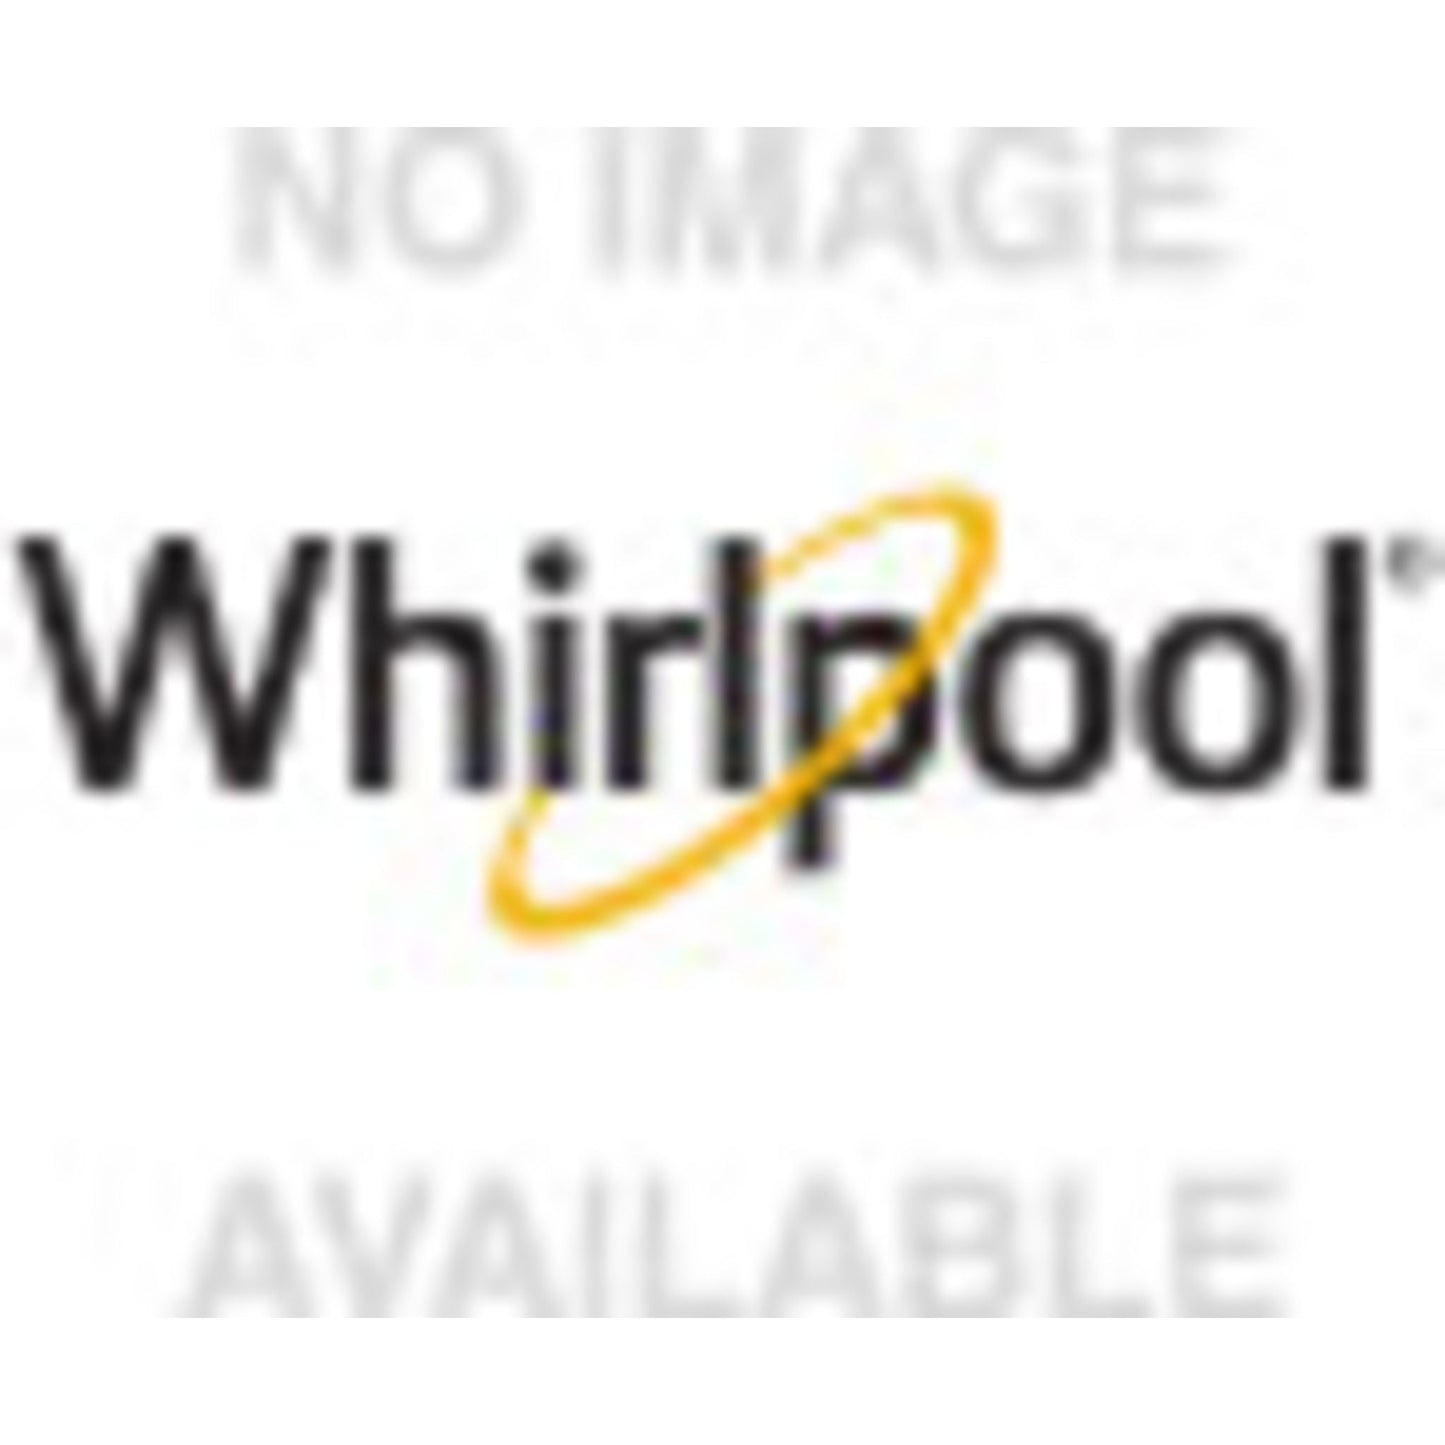 Whirlpool Dishwasher Stainless Steel Tub (WDT750SAKB) - Black